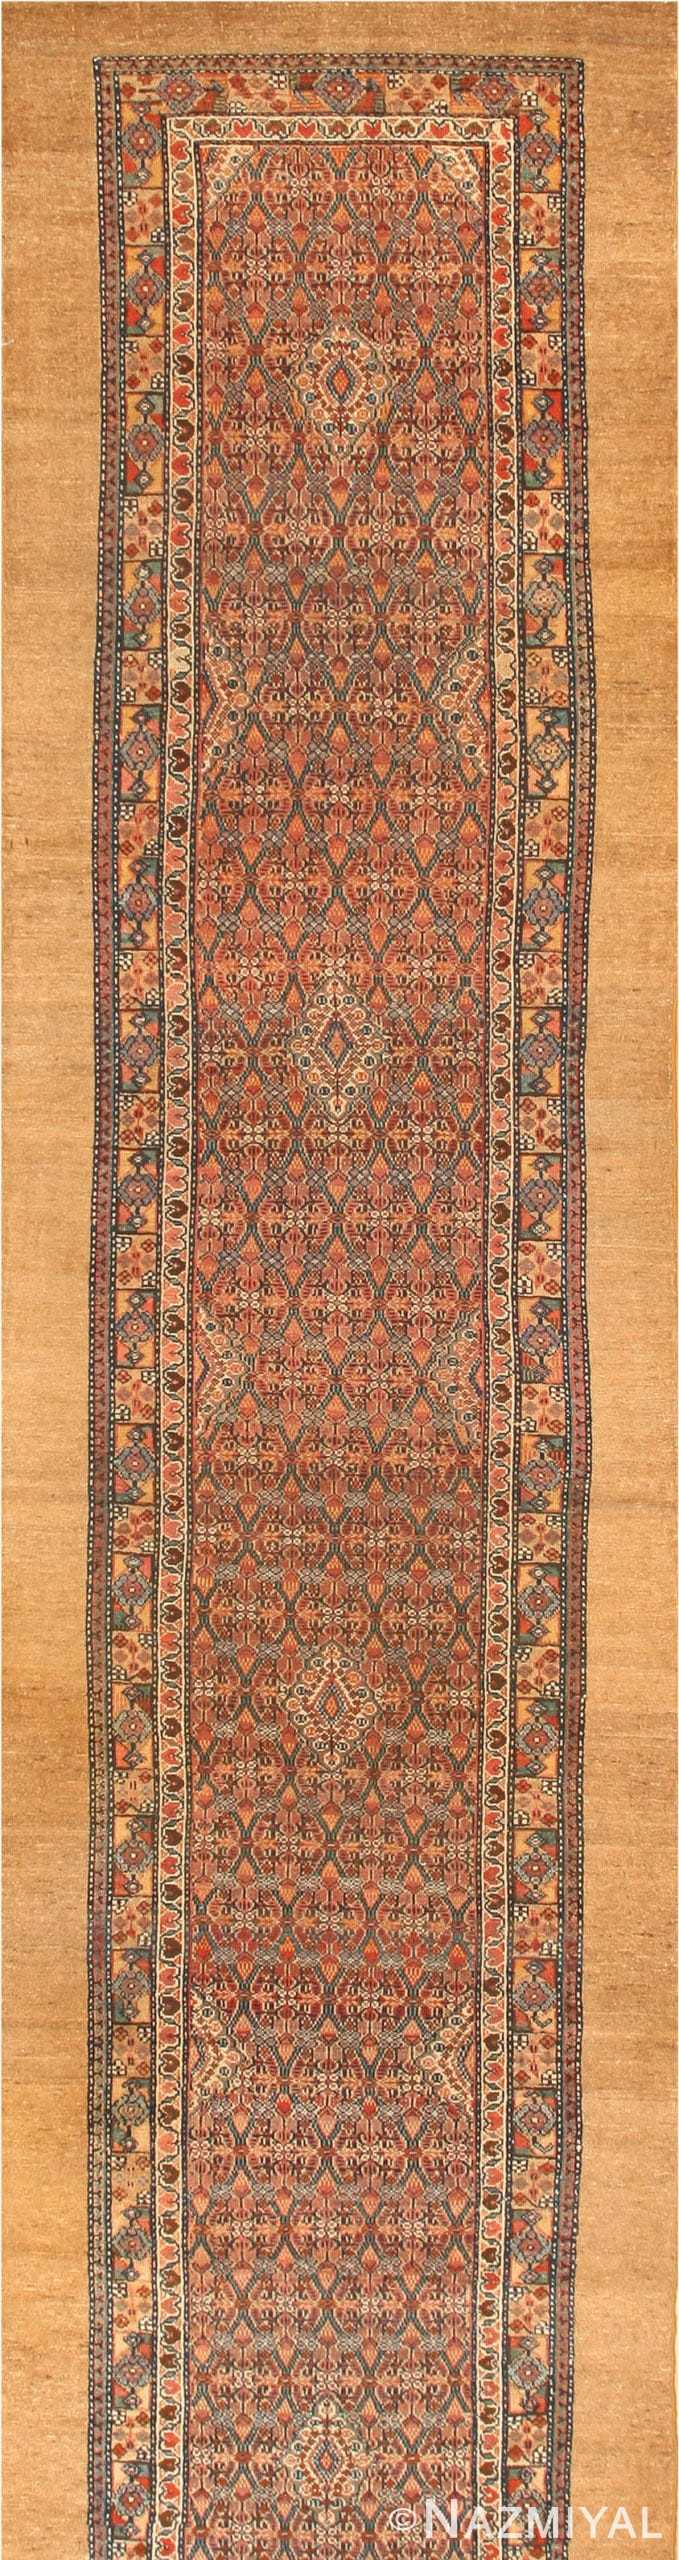 Tribal Antique Persian Camel Hair Serab Runner Rug #42392 by Nazmiyal Antique Rugs